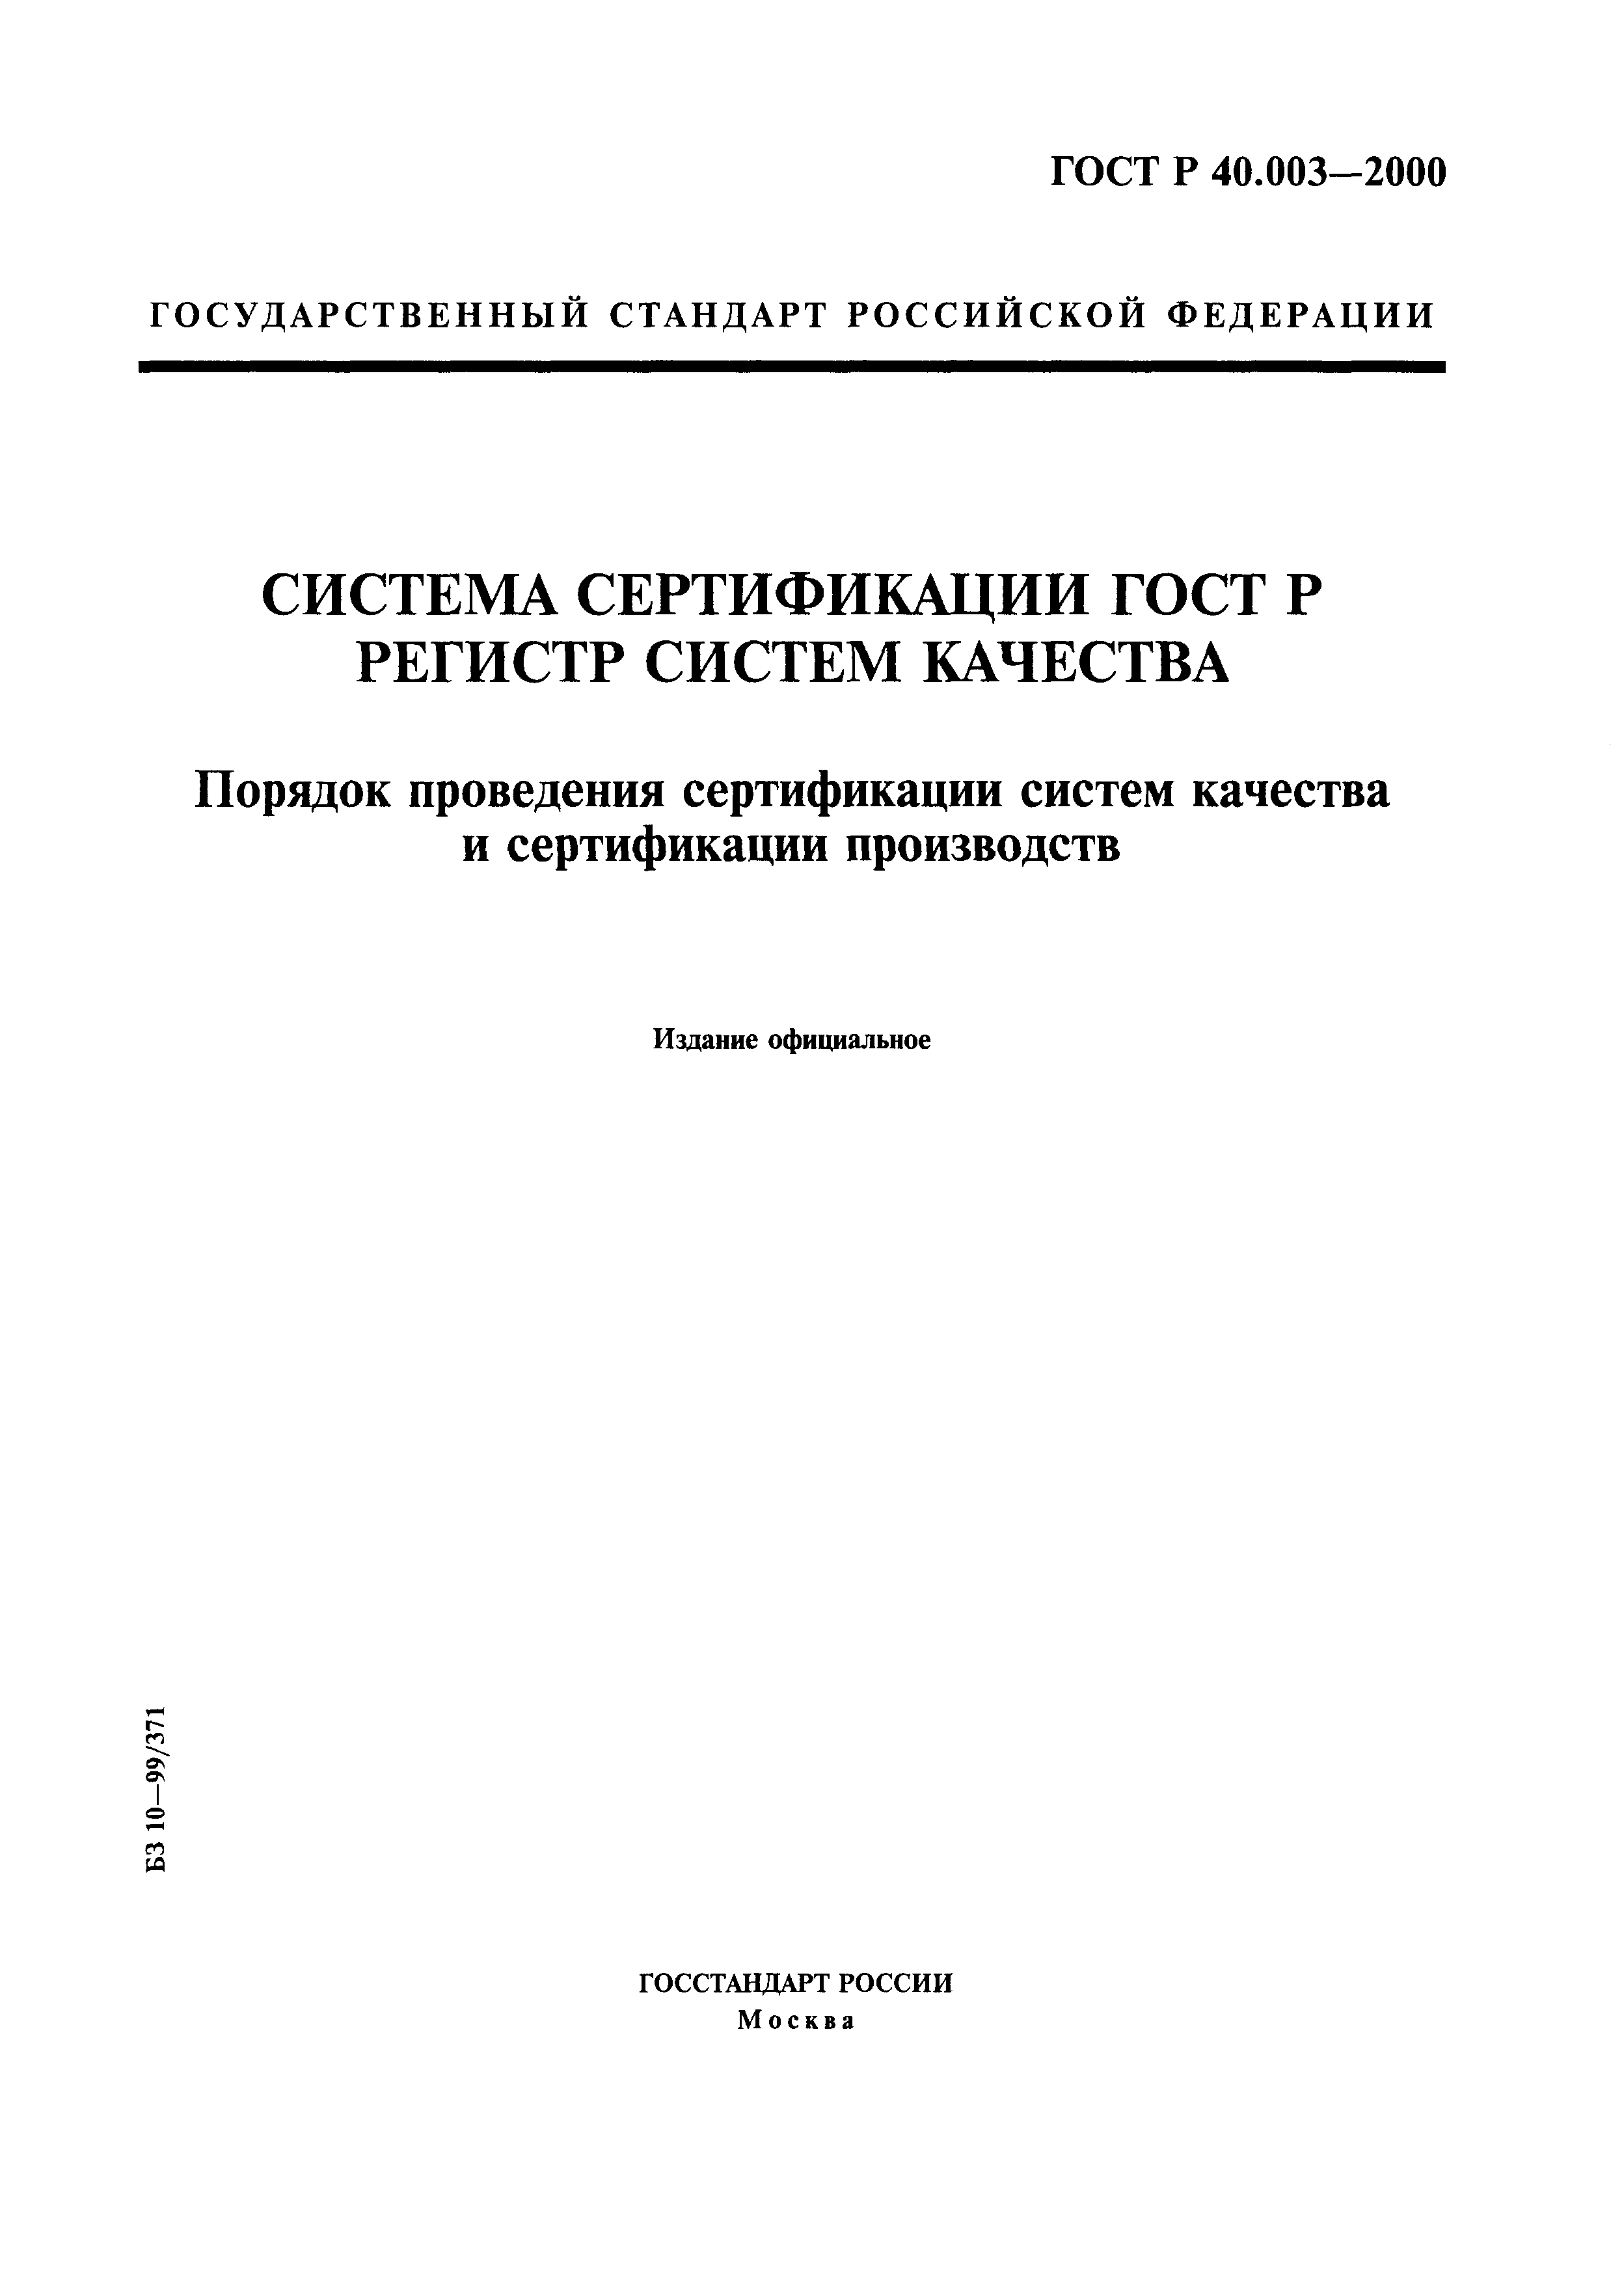 ГОСТ Р 40.003-2000